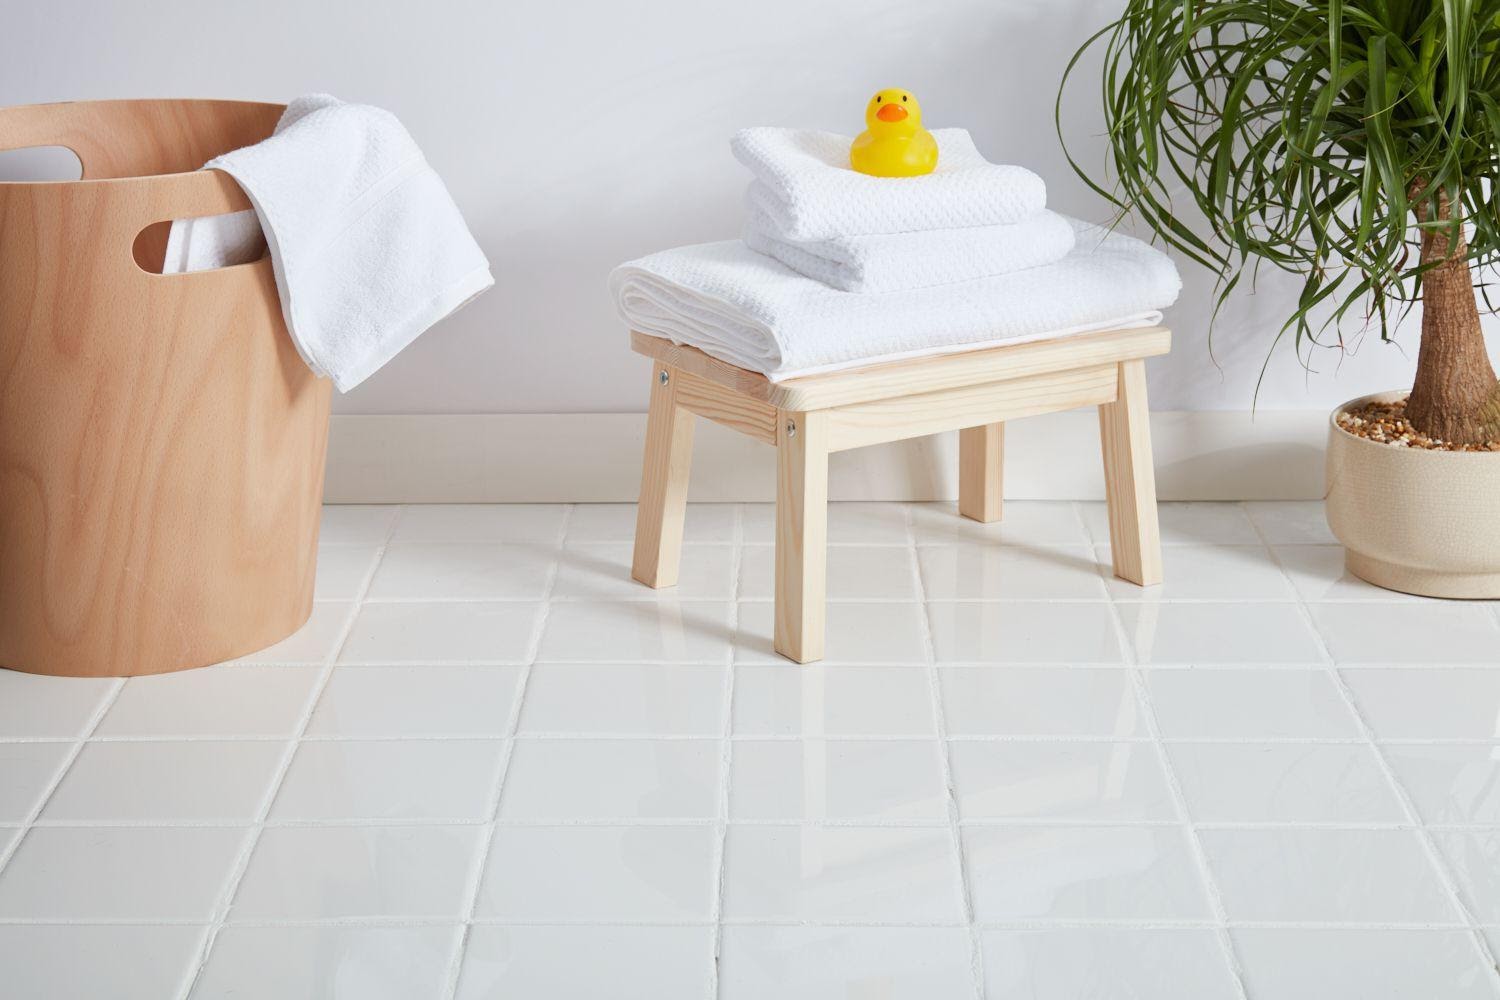 Top Benefits and Drawbacks of Using Ceramic Floor Tiles in Bedrooms